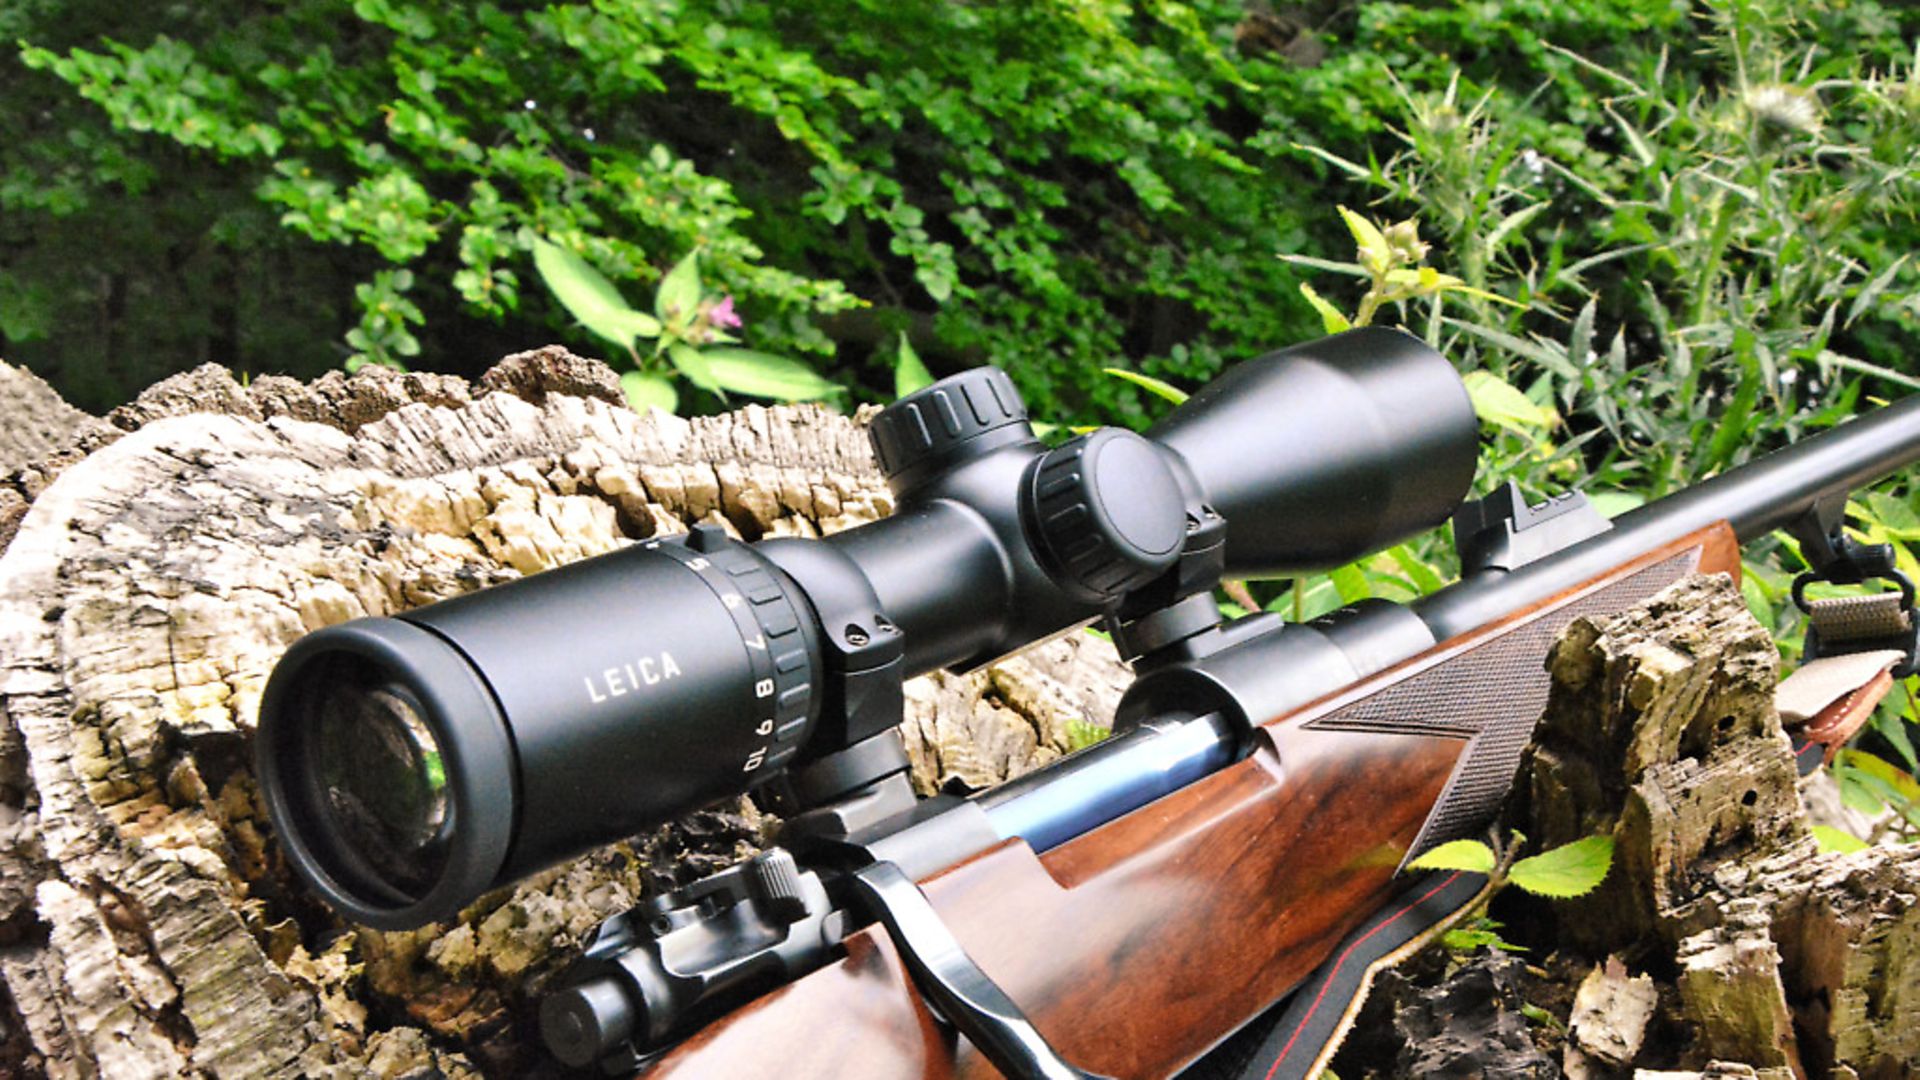 Leica Magnus 1.5-10x42 Non-illuminated riflescope - tried & tested